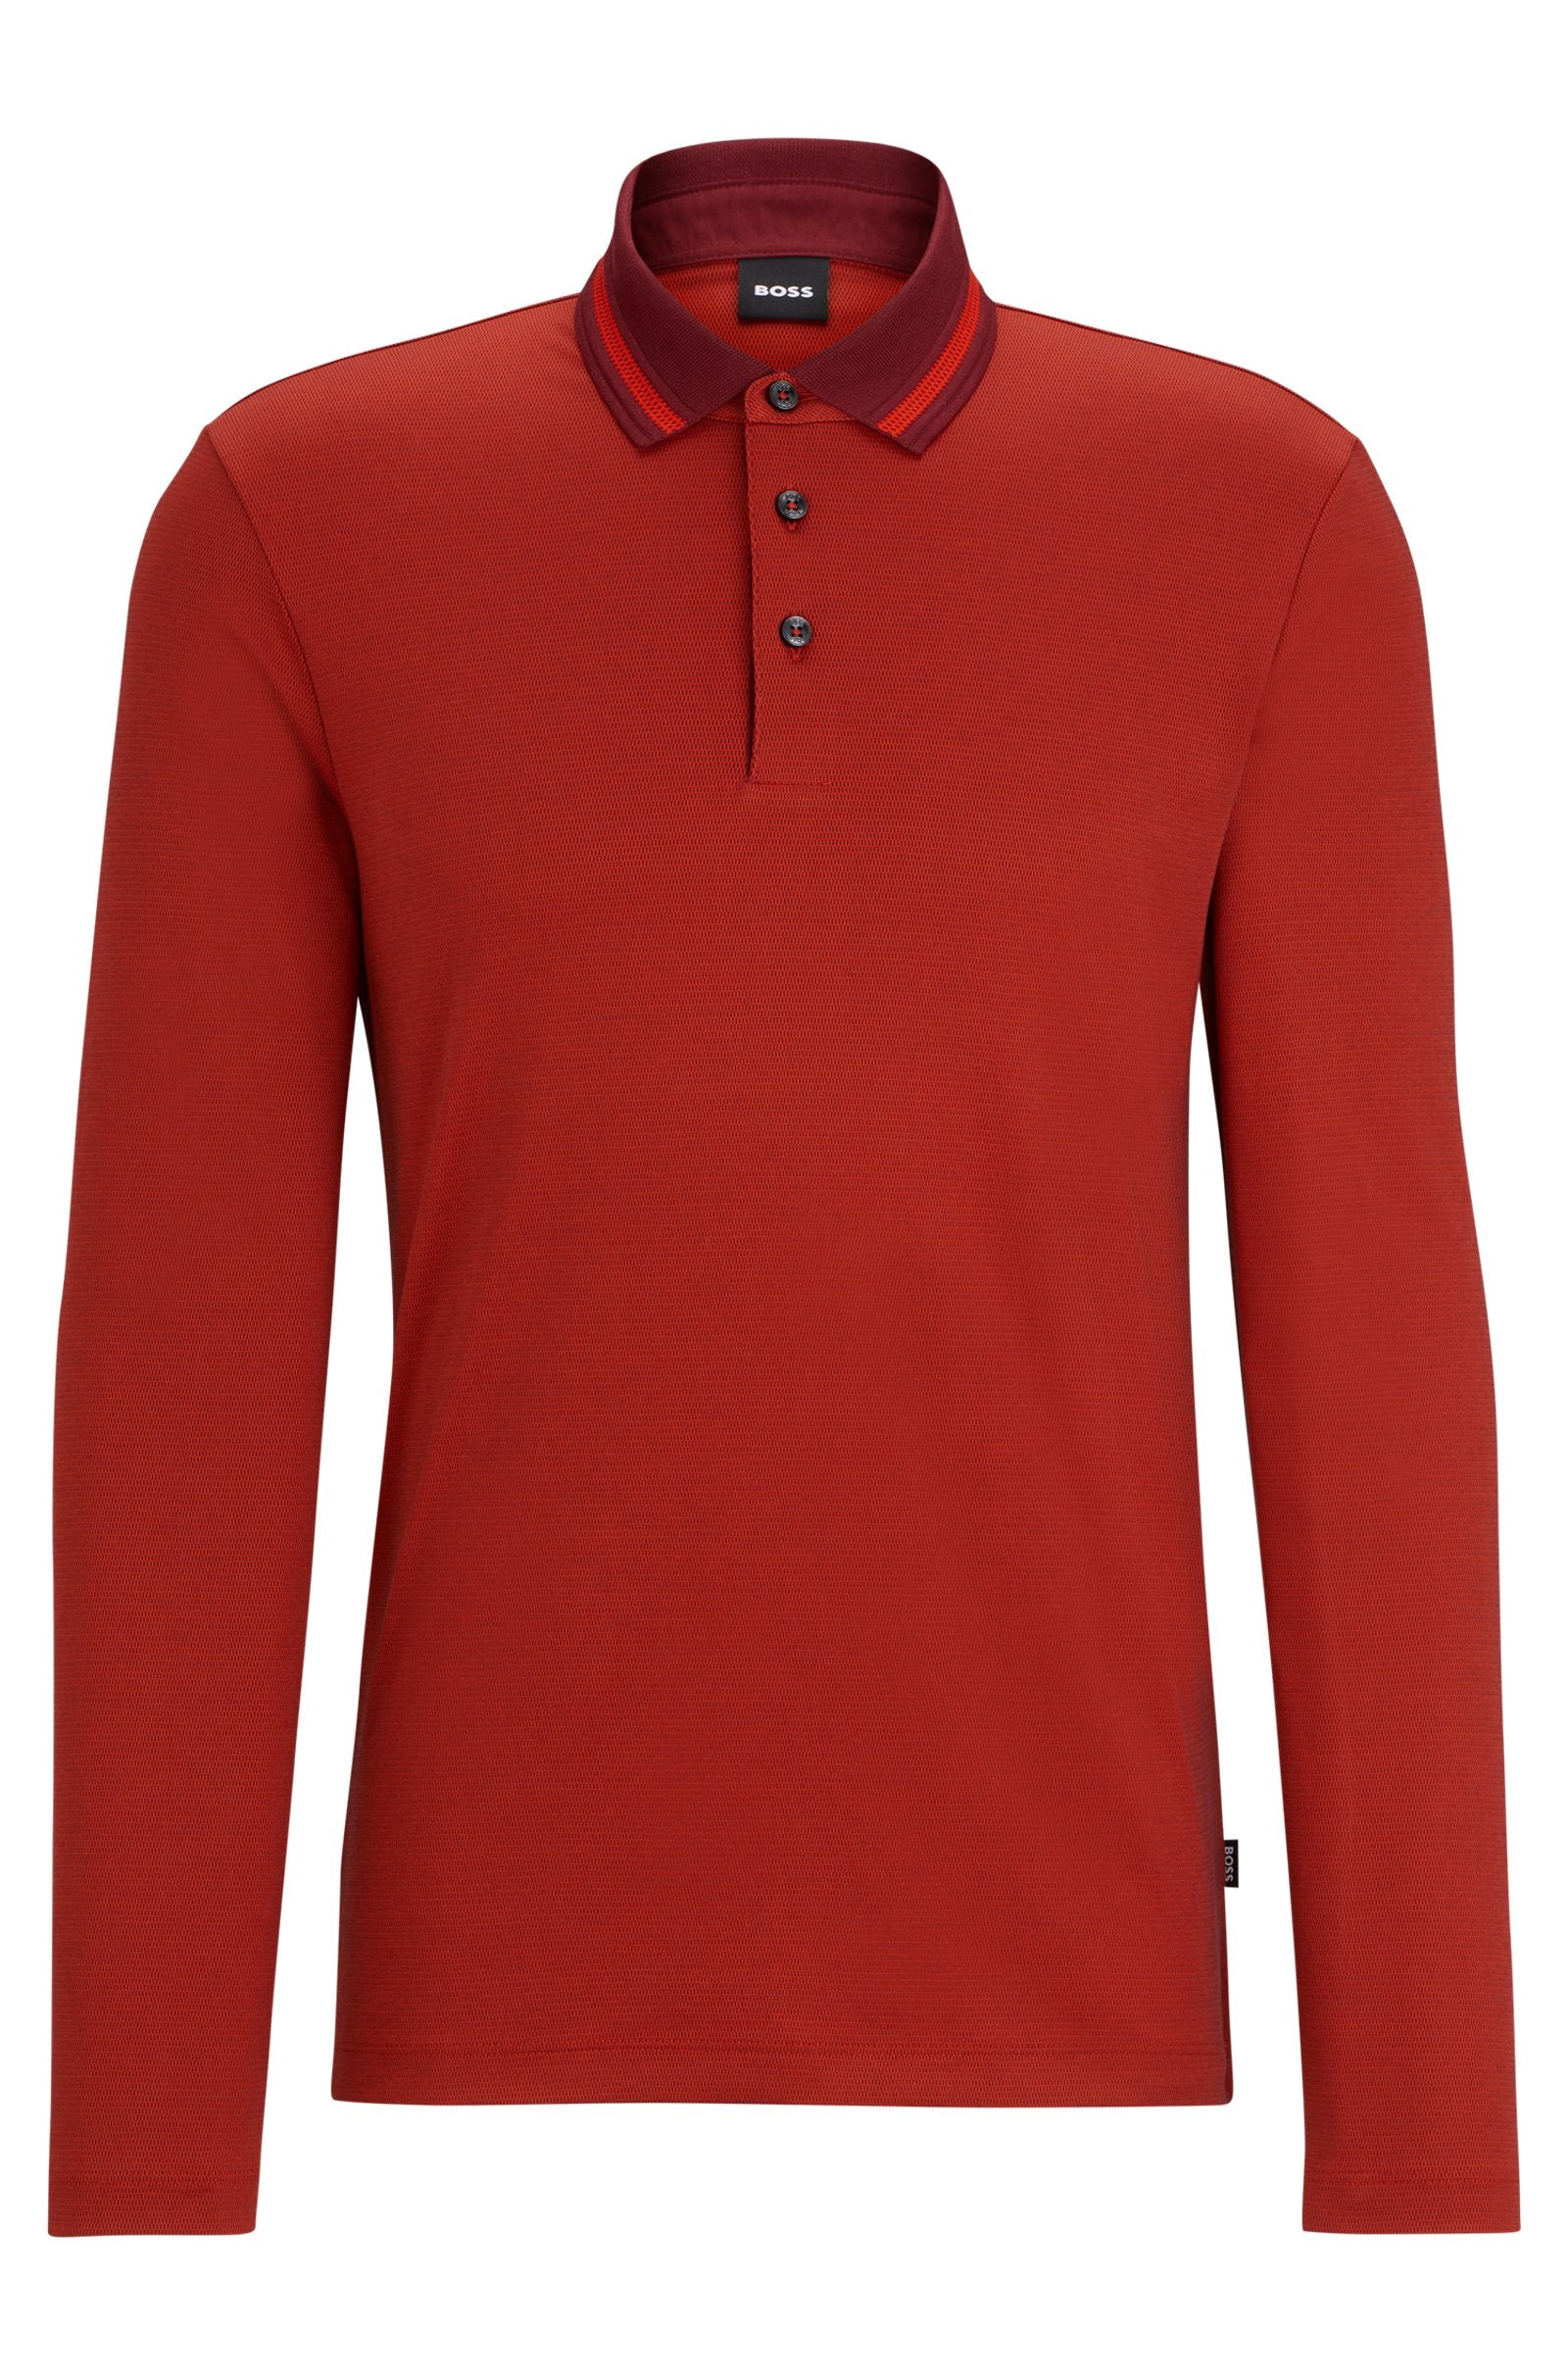 Boss Men's Slim-Fit Short-sleeved T-Shirt in Mercerized Cotton - Dark Red - Size Medium